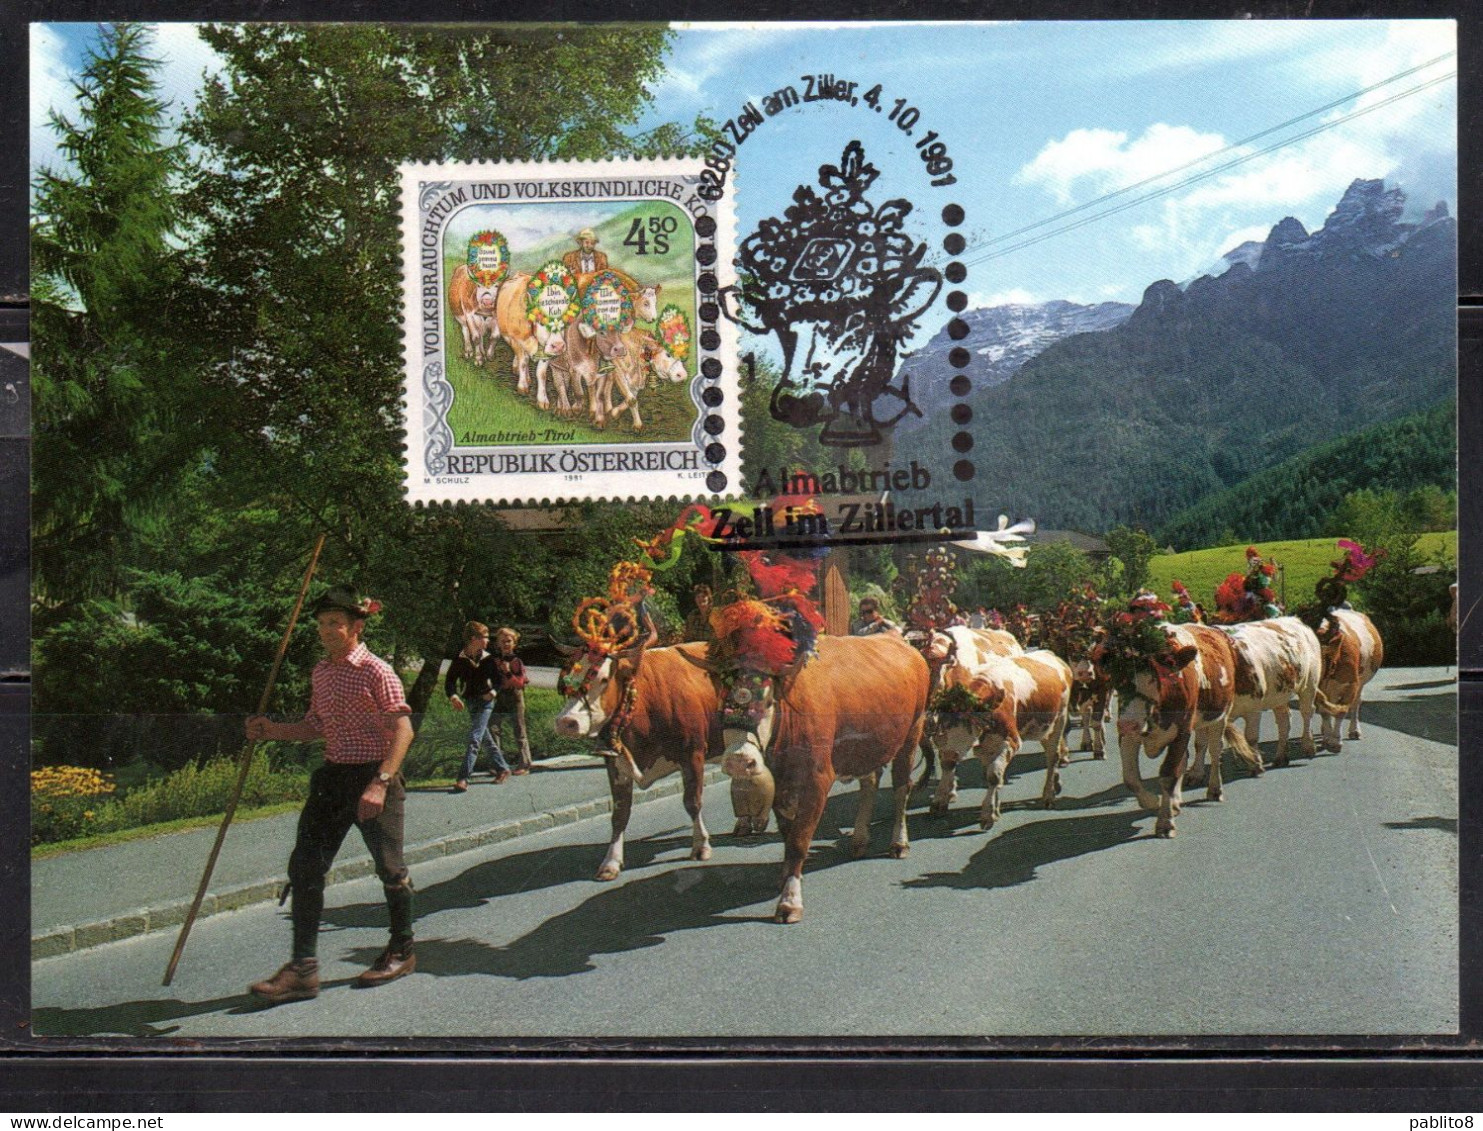 AUSTRIA ÖSTERREICH 1991 AUSTRIAN FOLK FESTIVAL ALMABTRIEB TYROL 4.50s CARTE MAXIMUM MAXI CARD - Cartas Máxima